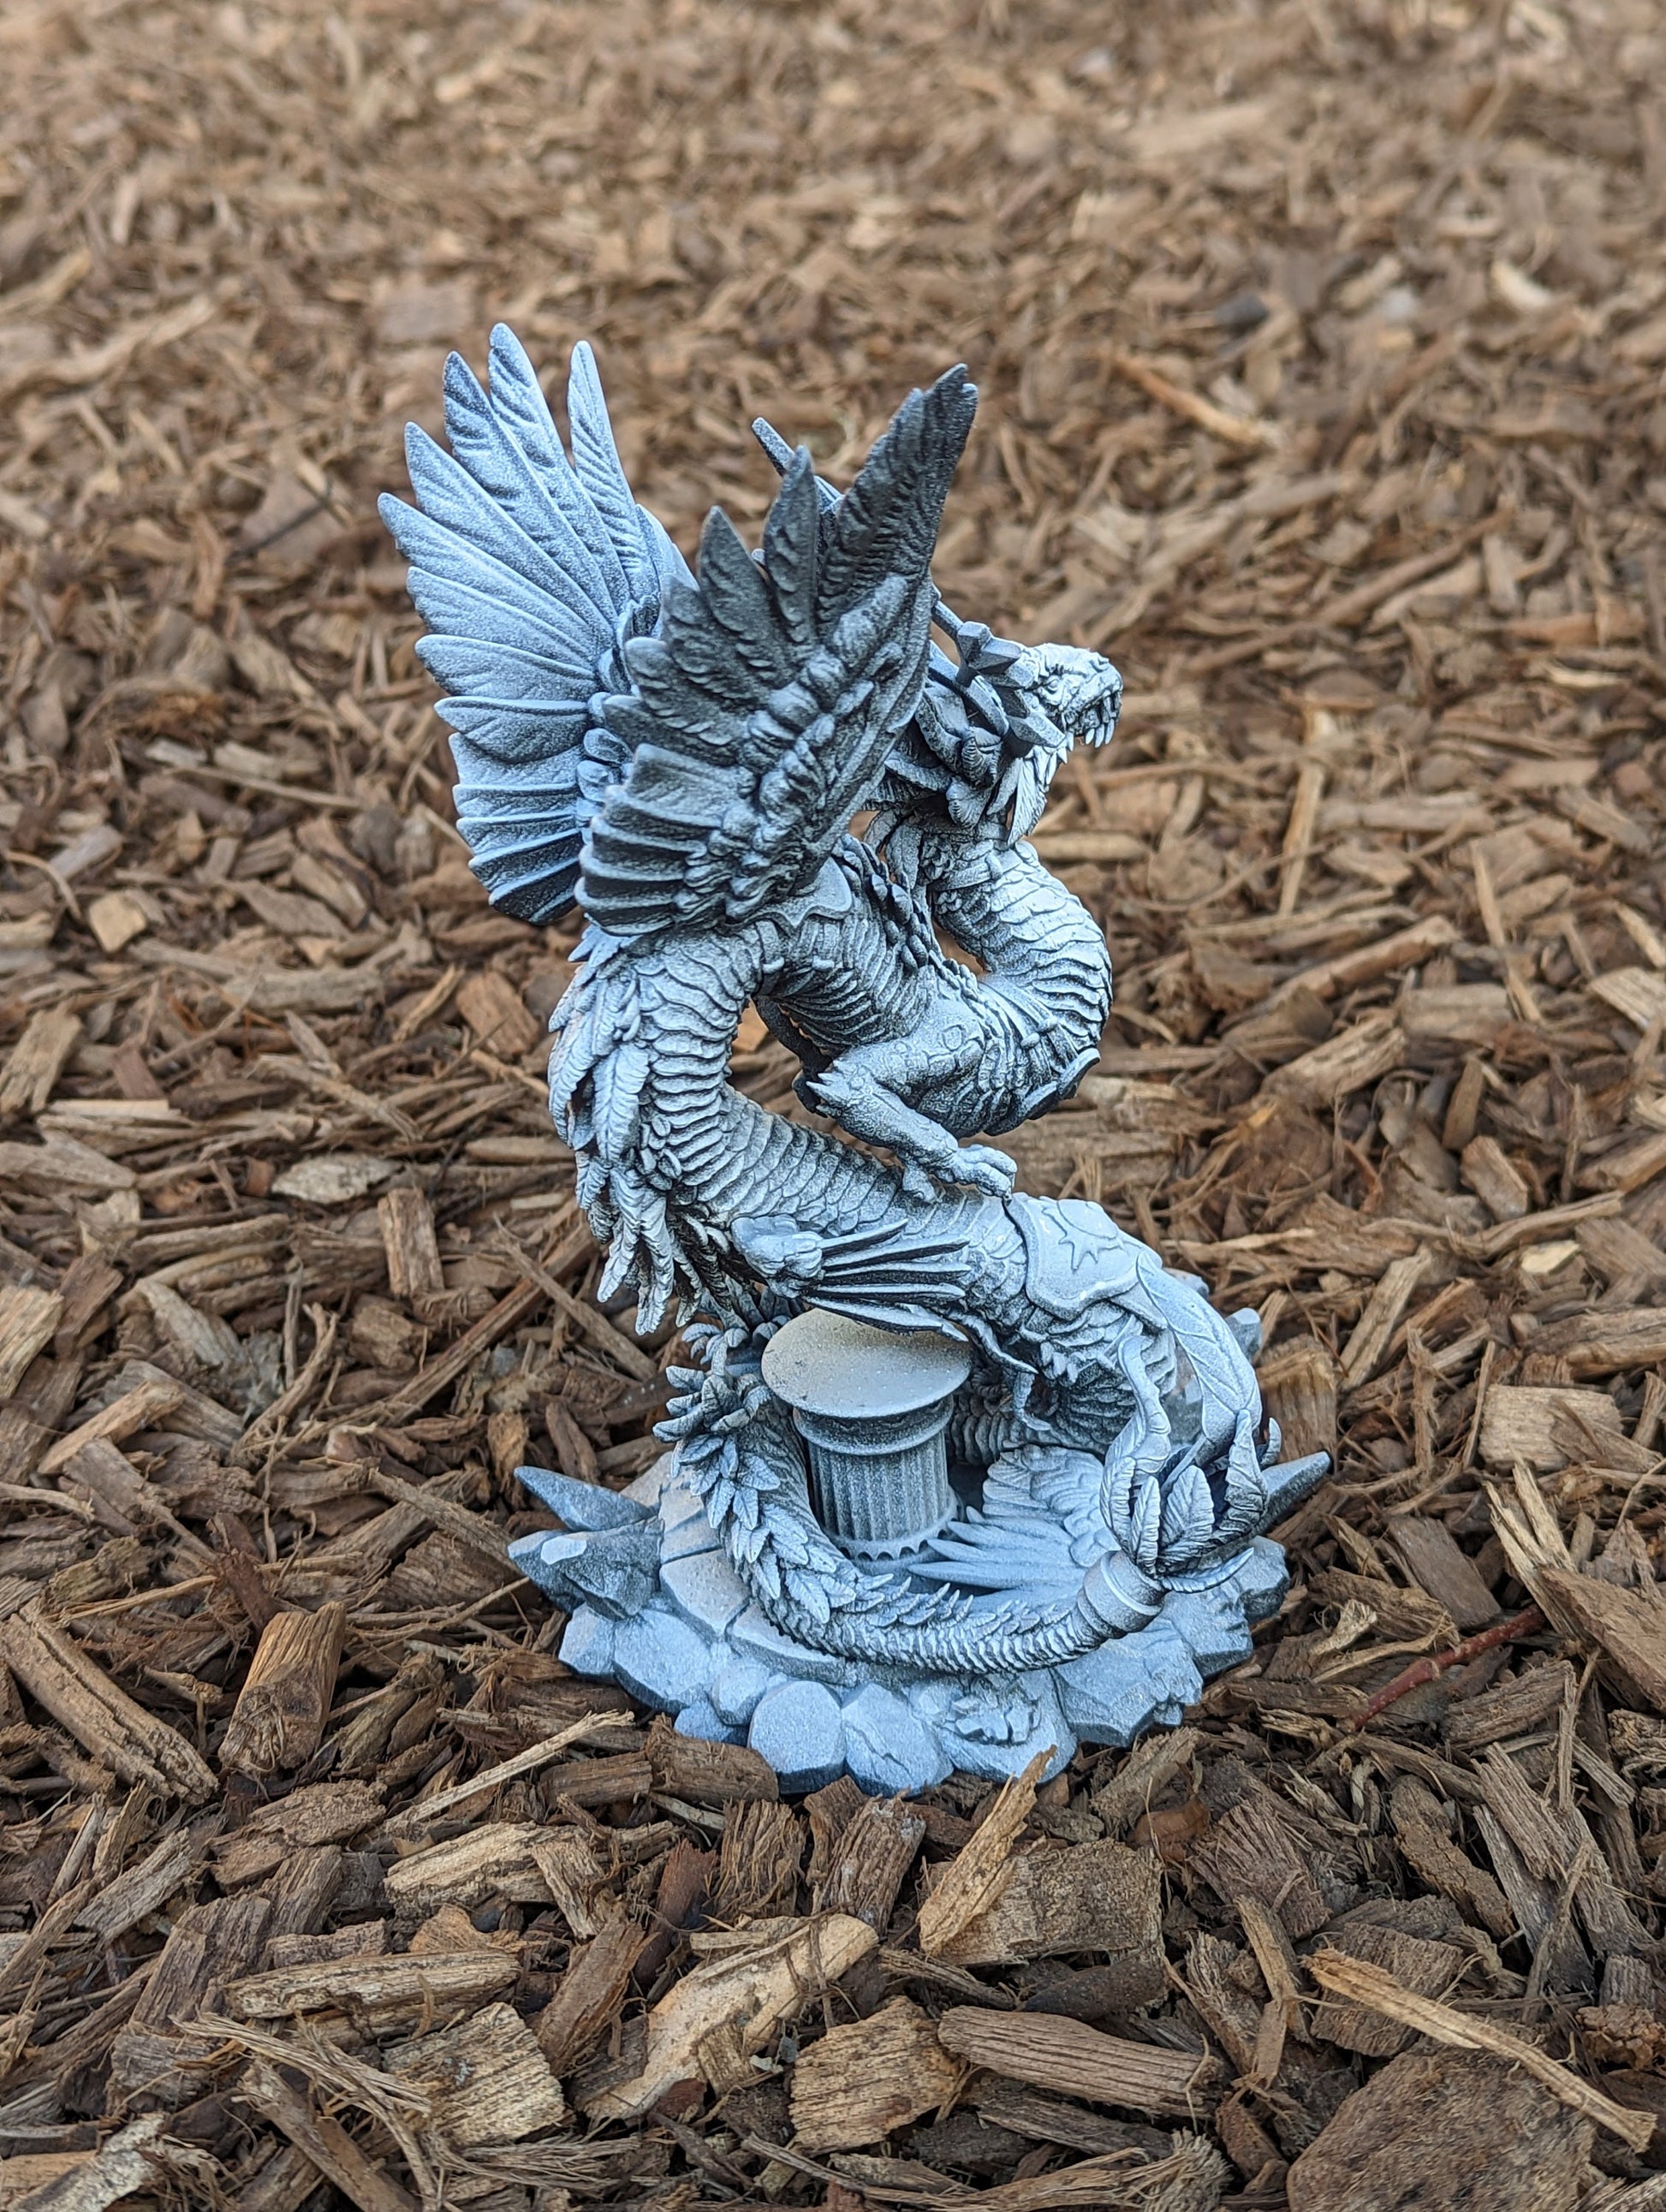 Celestial Dragon | Resin 3D Printed Miniature | White Werewolf Tavern